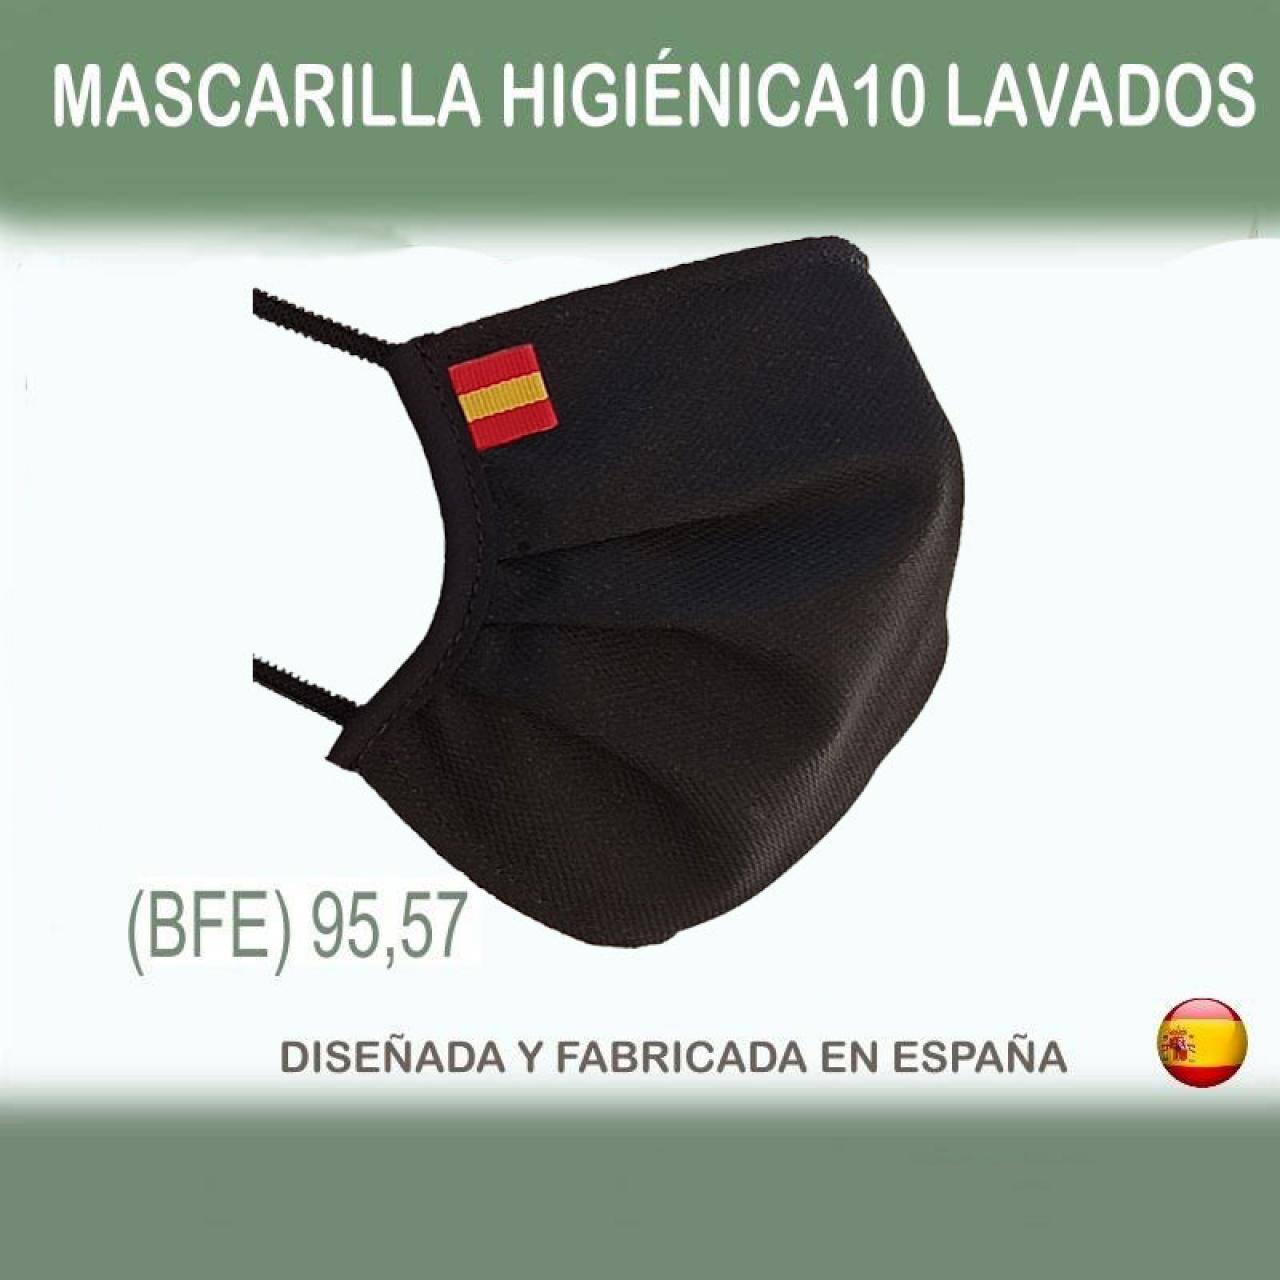 Mascarilla higiénica reutilizable certificada por Aitex para 10 lavados con bandera españa